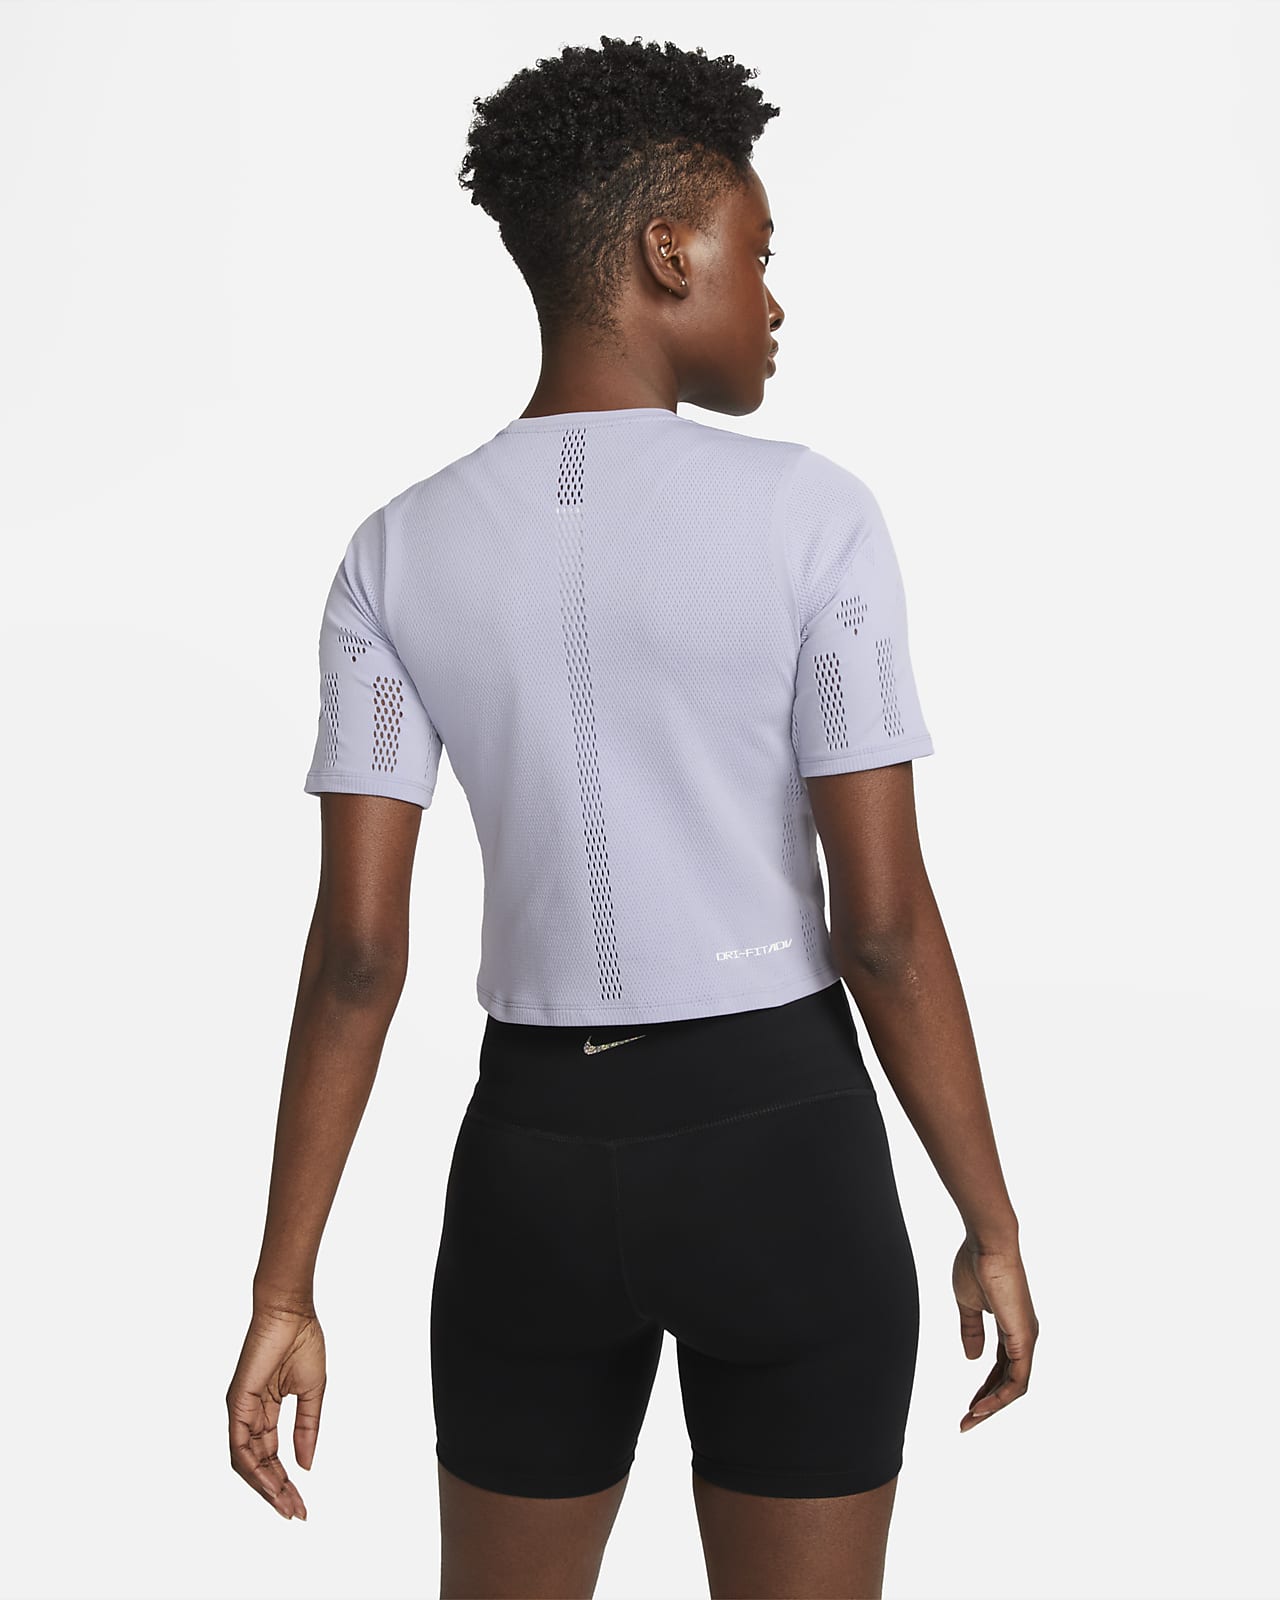 Nike Yoga Dri-FIT ADV Luxe Women's Short-Sleeve Crop Top